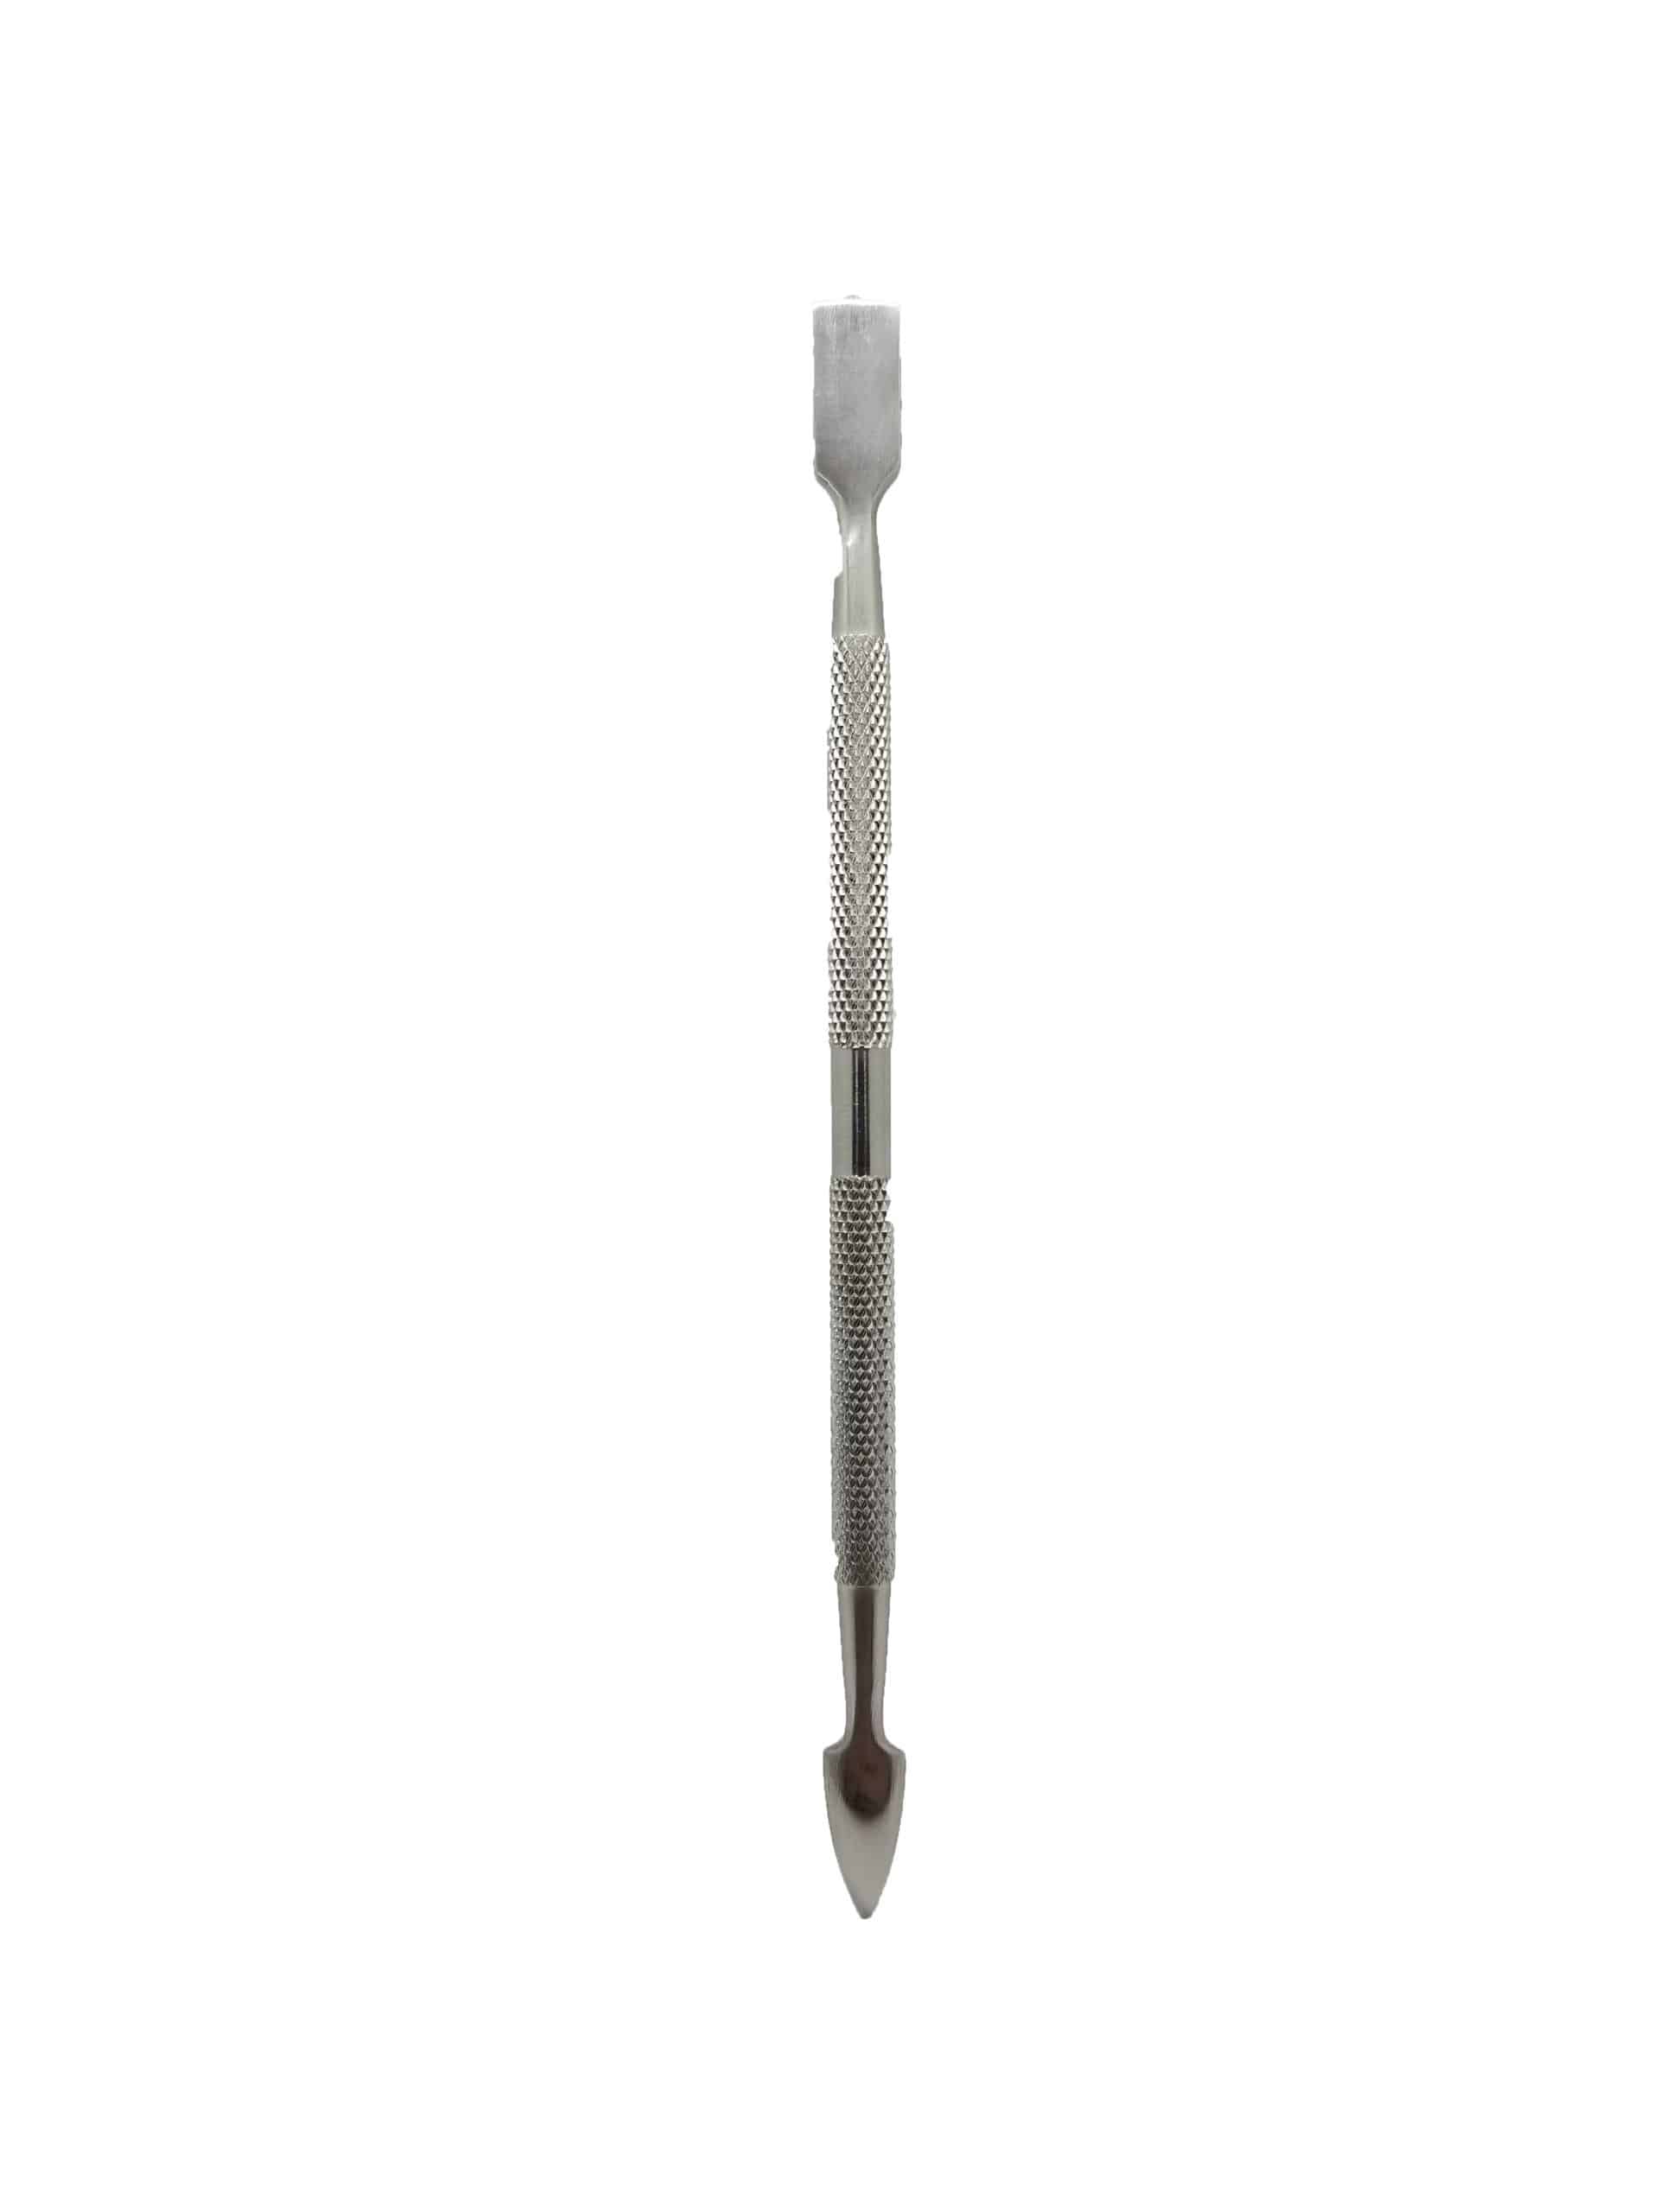 Metal Dab Tool - M0212